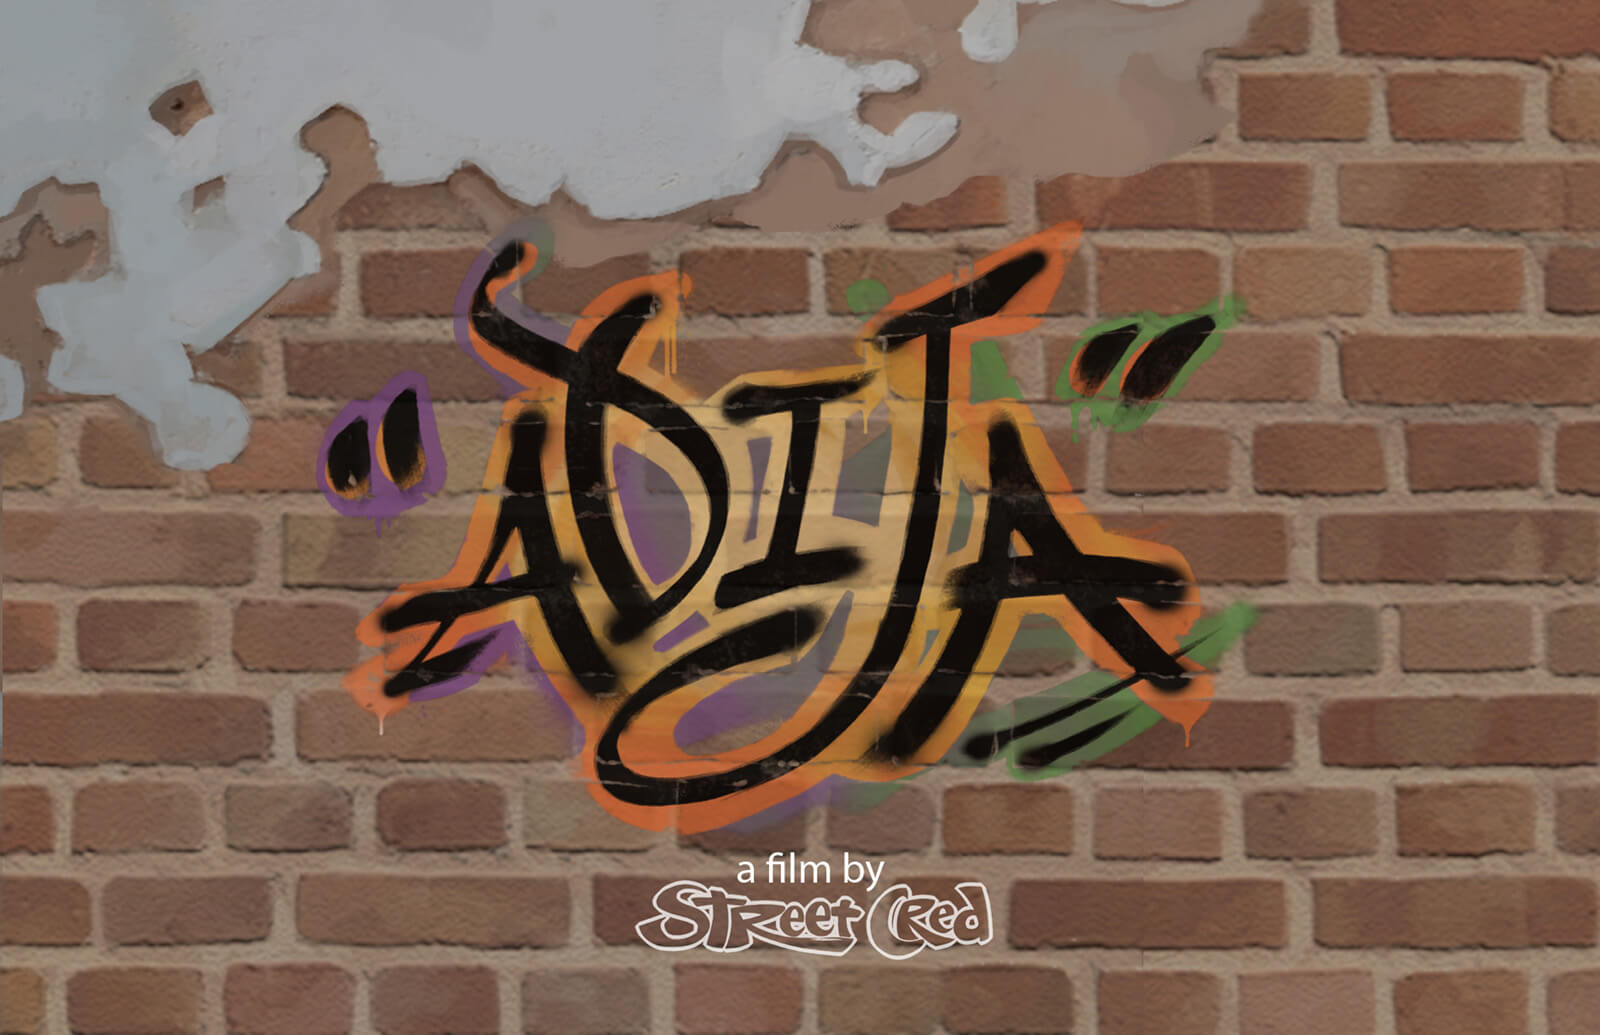 A title card reading "Adija" in stylized black and orange script. "A film by Street Cred" is seen below.